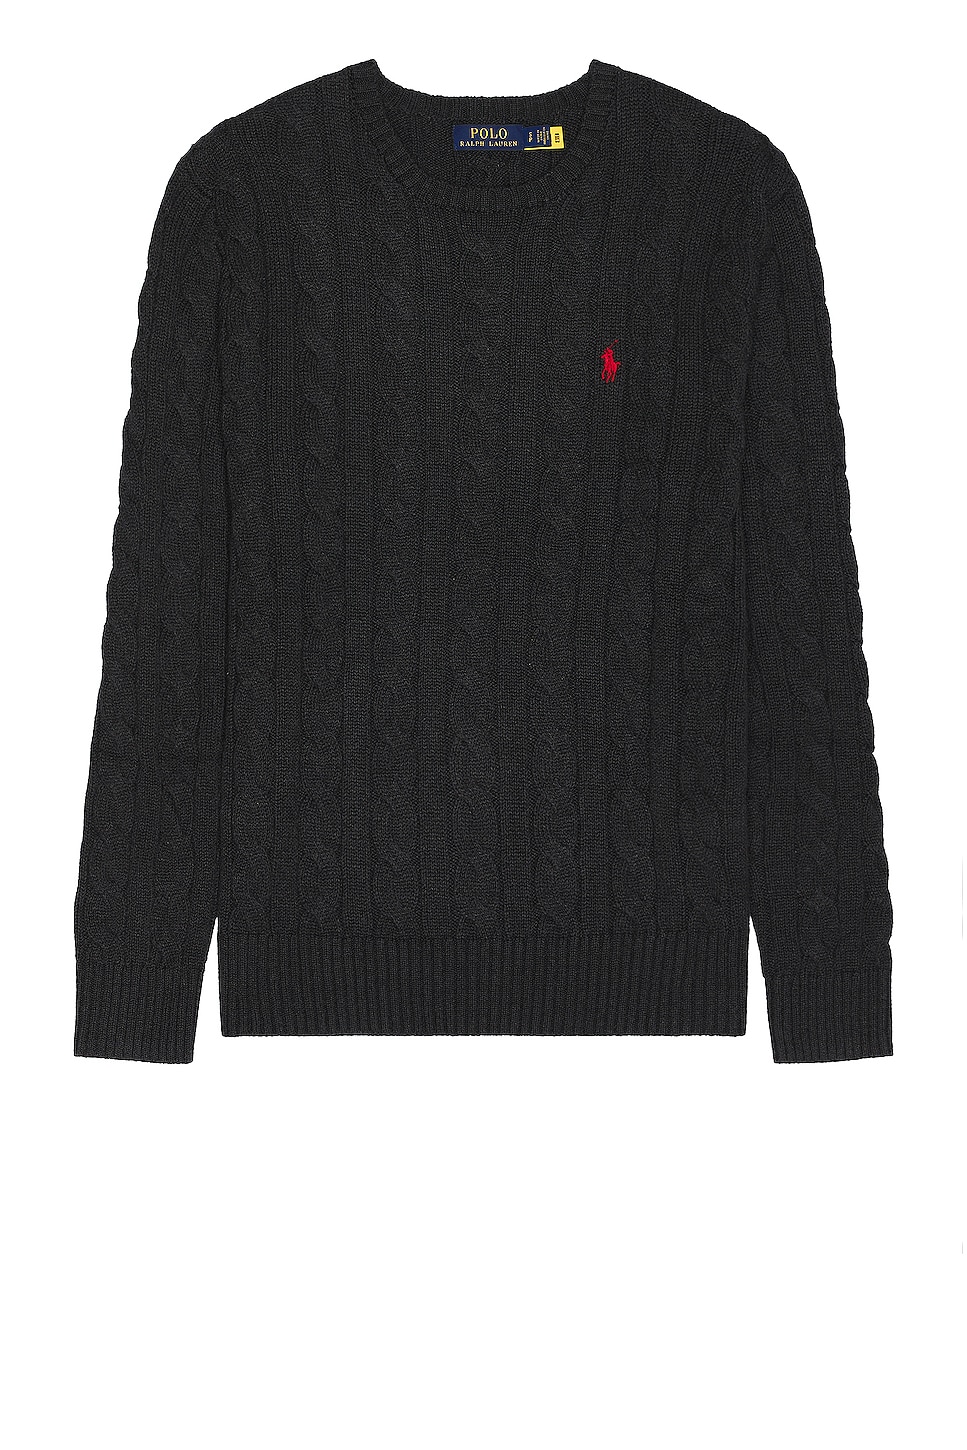 Polo Ralph Lauren Sweater in Dark Granite Heather | FWRD